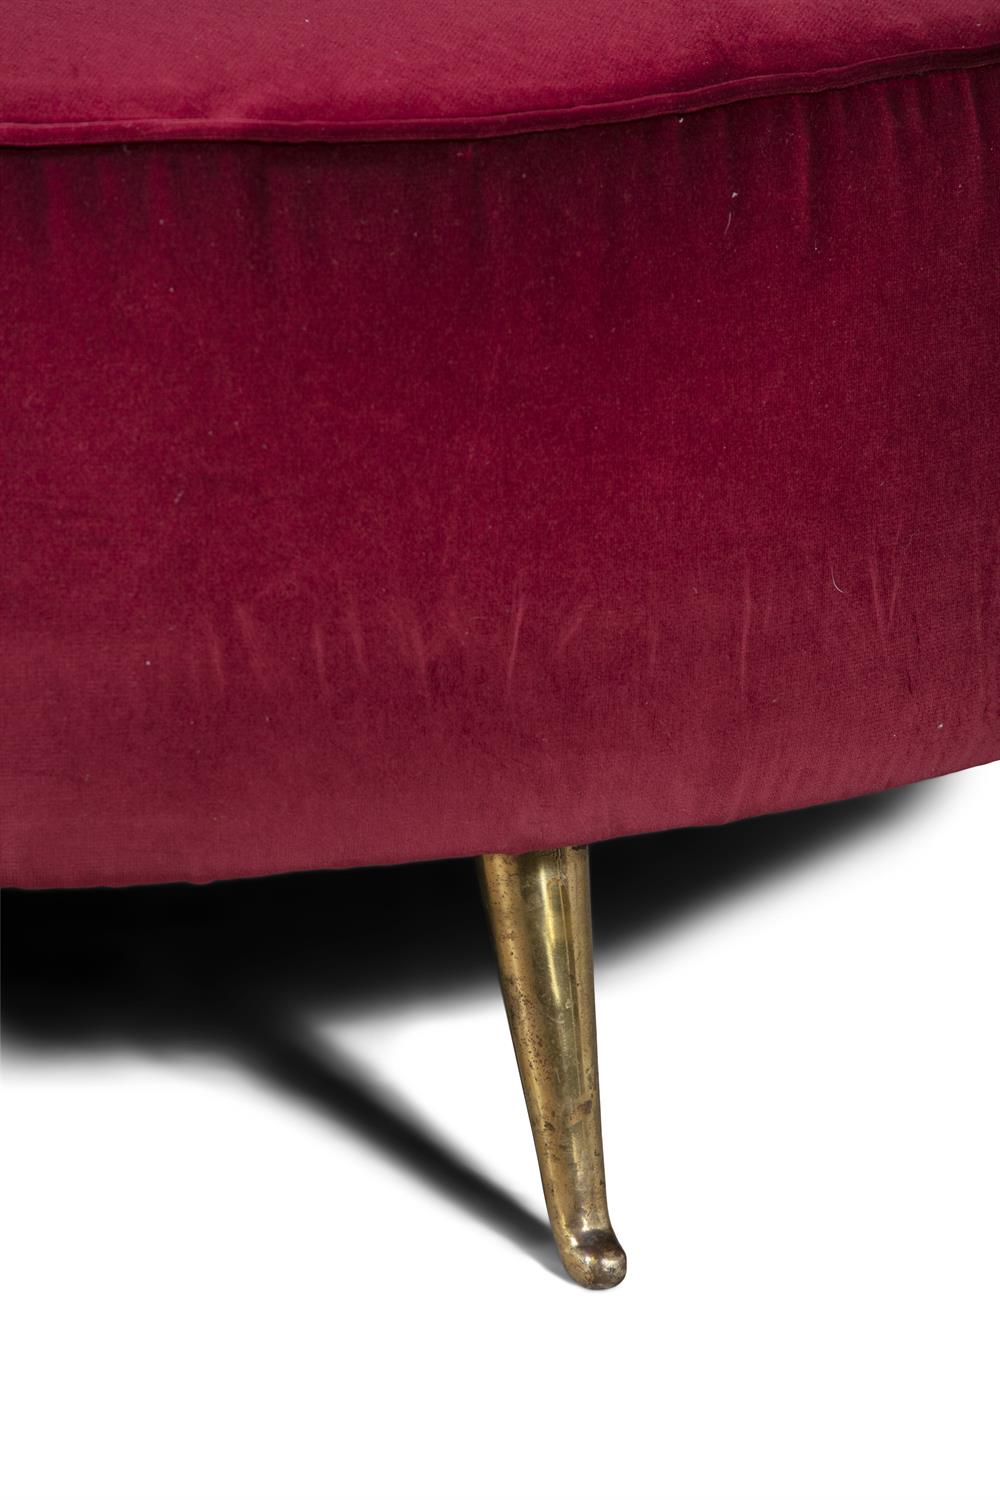 OTTOMAN A Mid-Century Italian upholstered circular ottoman on brass feet. 90(d) x 34cm(h) - Image 4 of 4